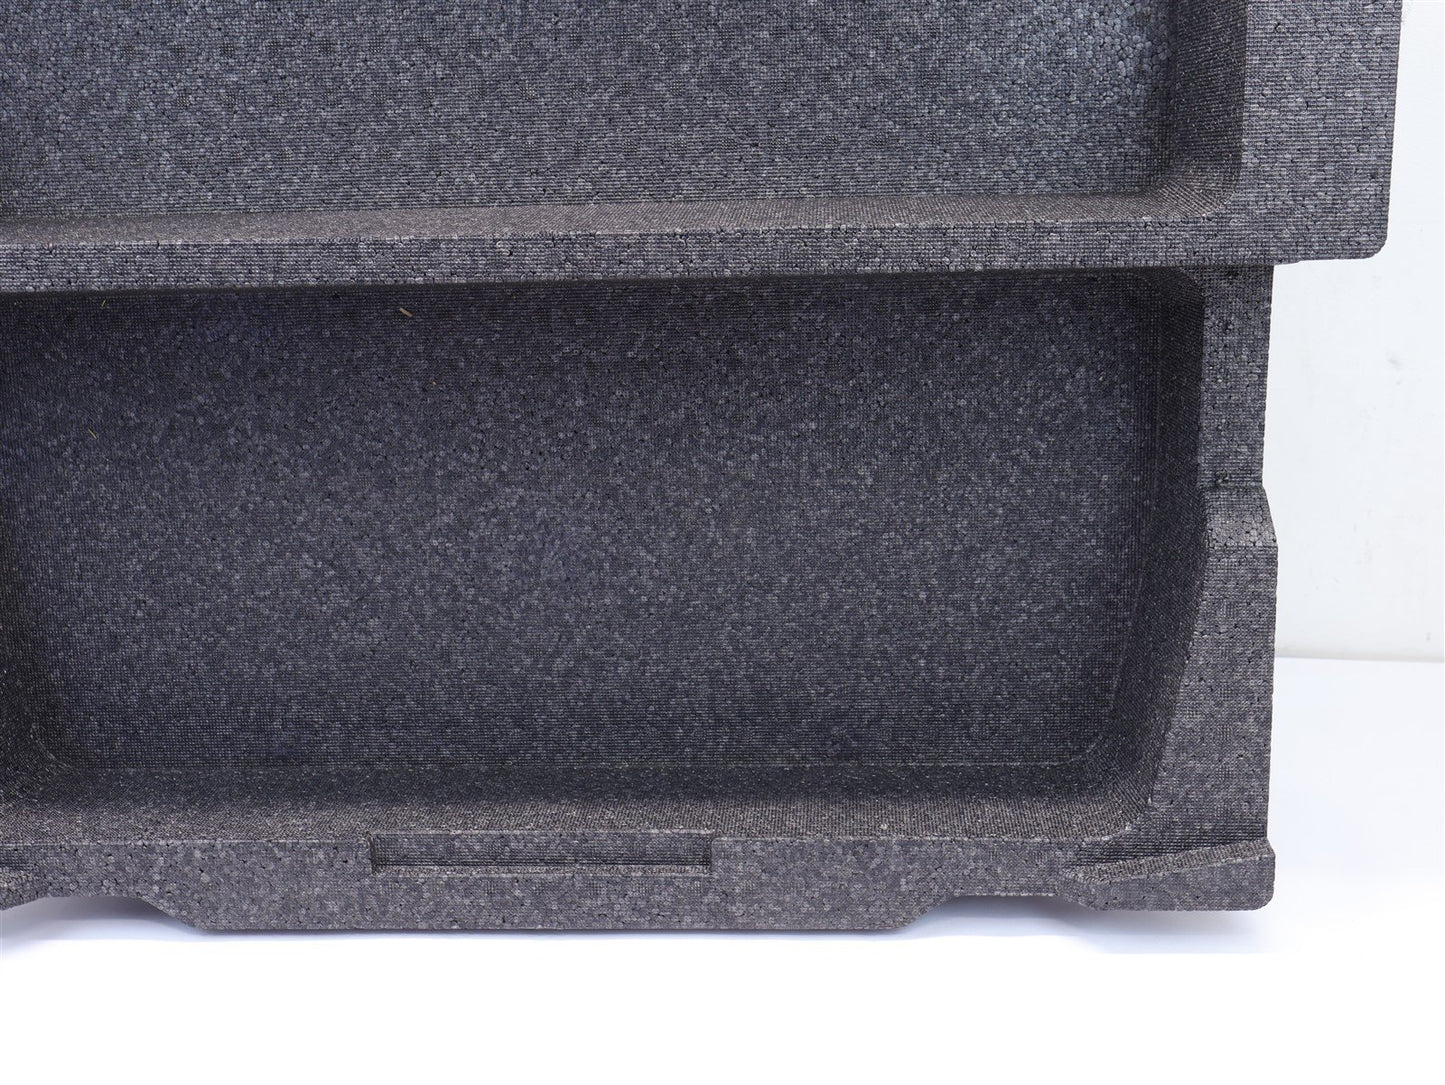 2012 Subaru Outback Trunk Spare Tire Cover Panel Organizer Tray Foam 2010-2014